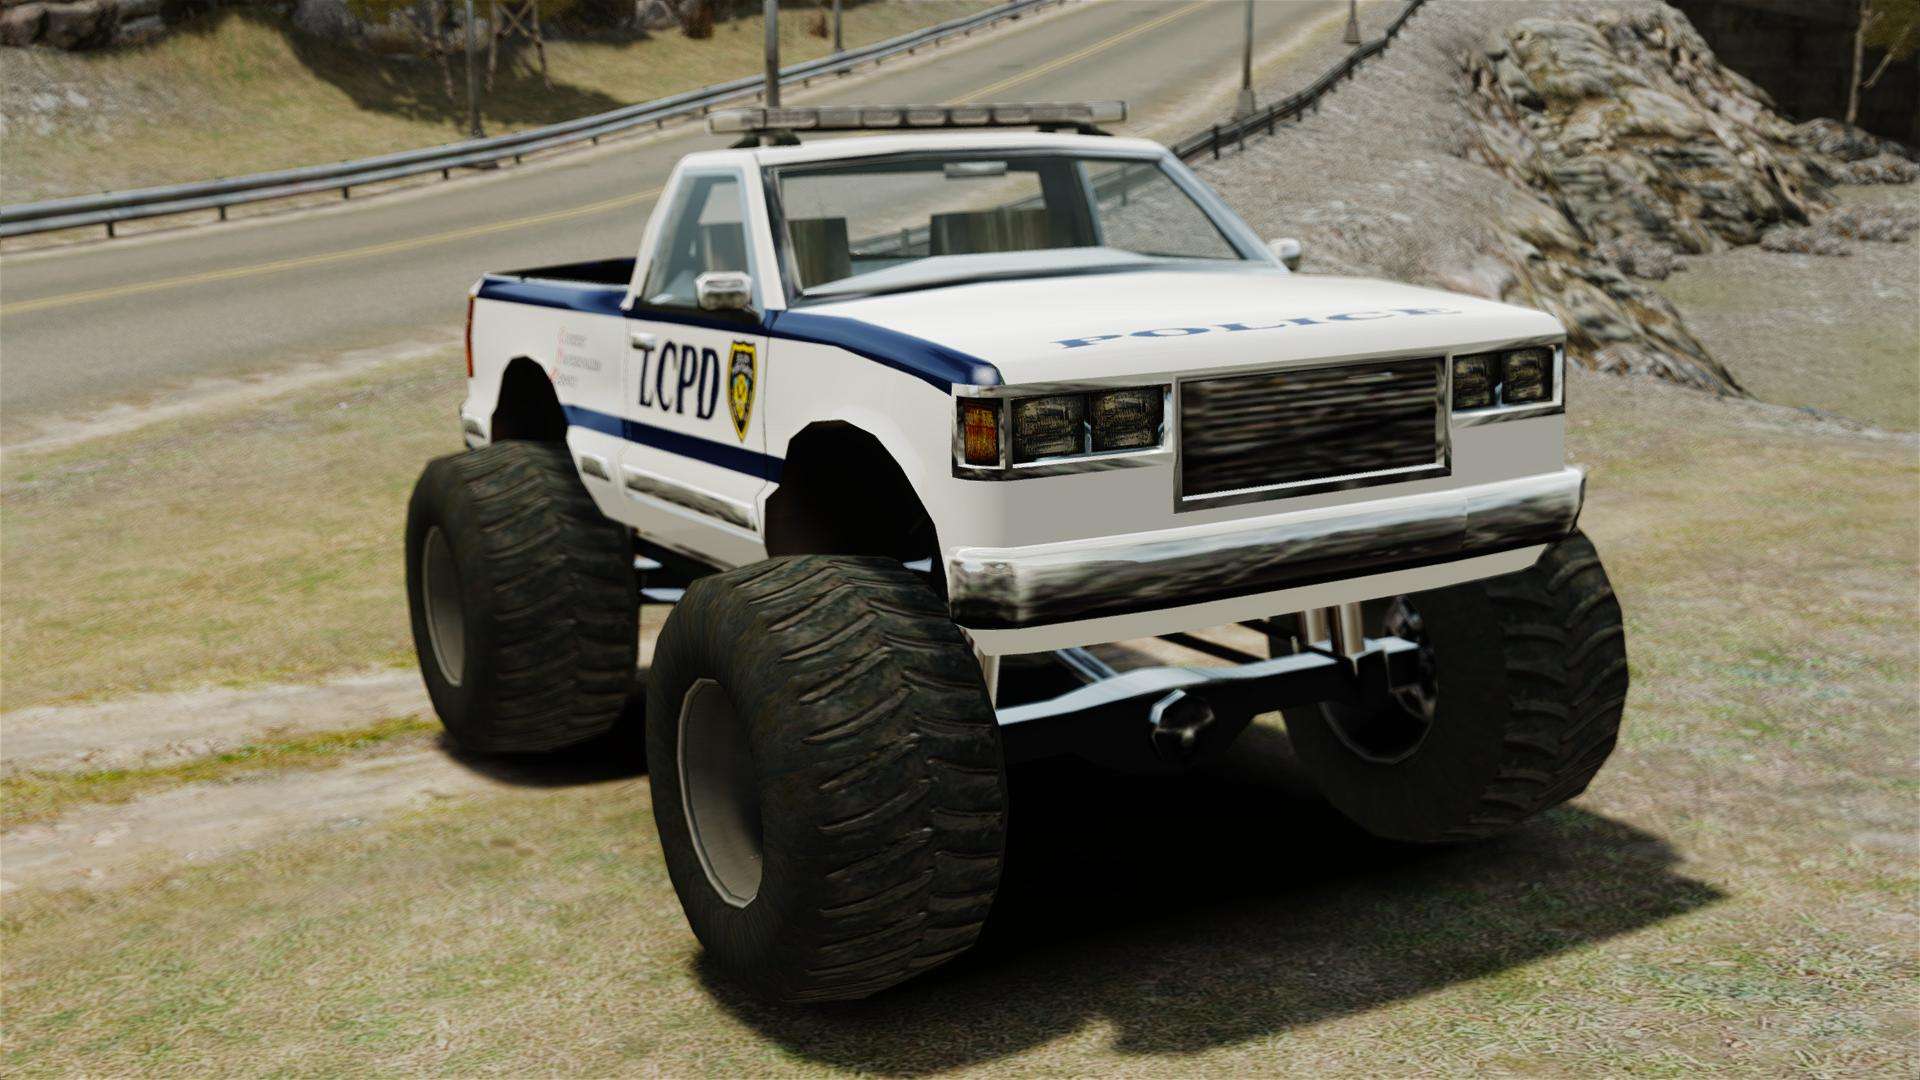 Cop Monster Truck ELS for GTA 4